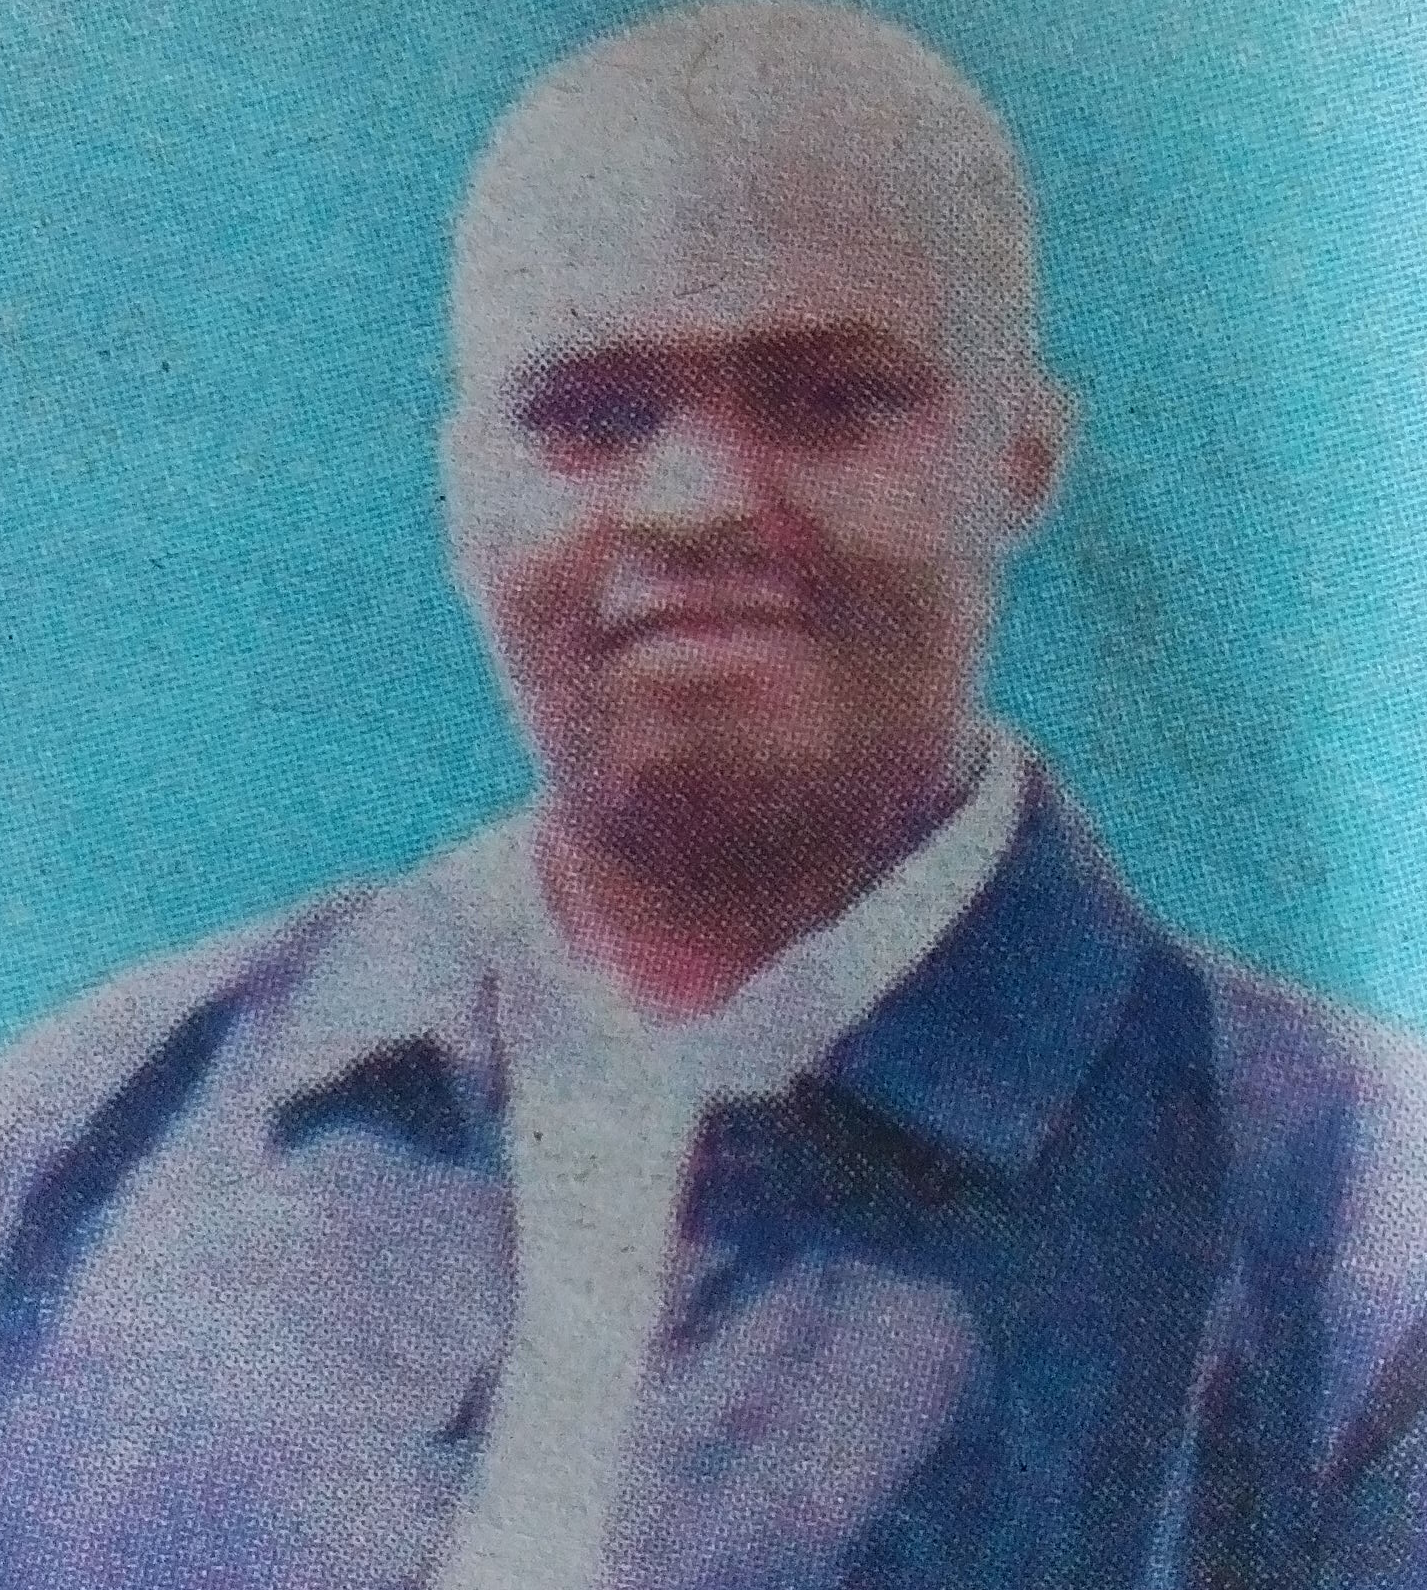 Obituary Image of Edward Mwaura Kinuthia